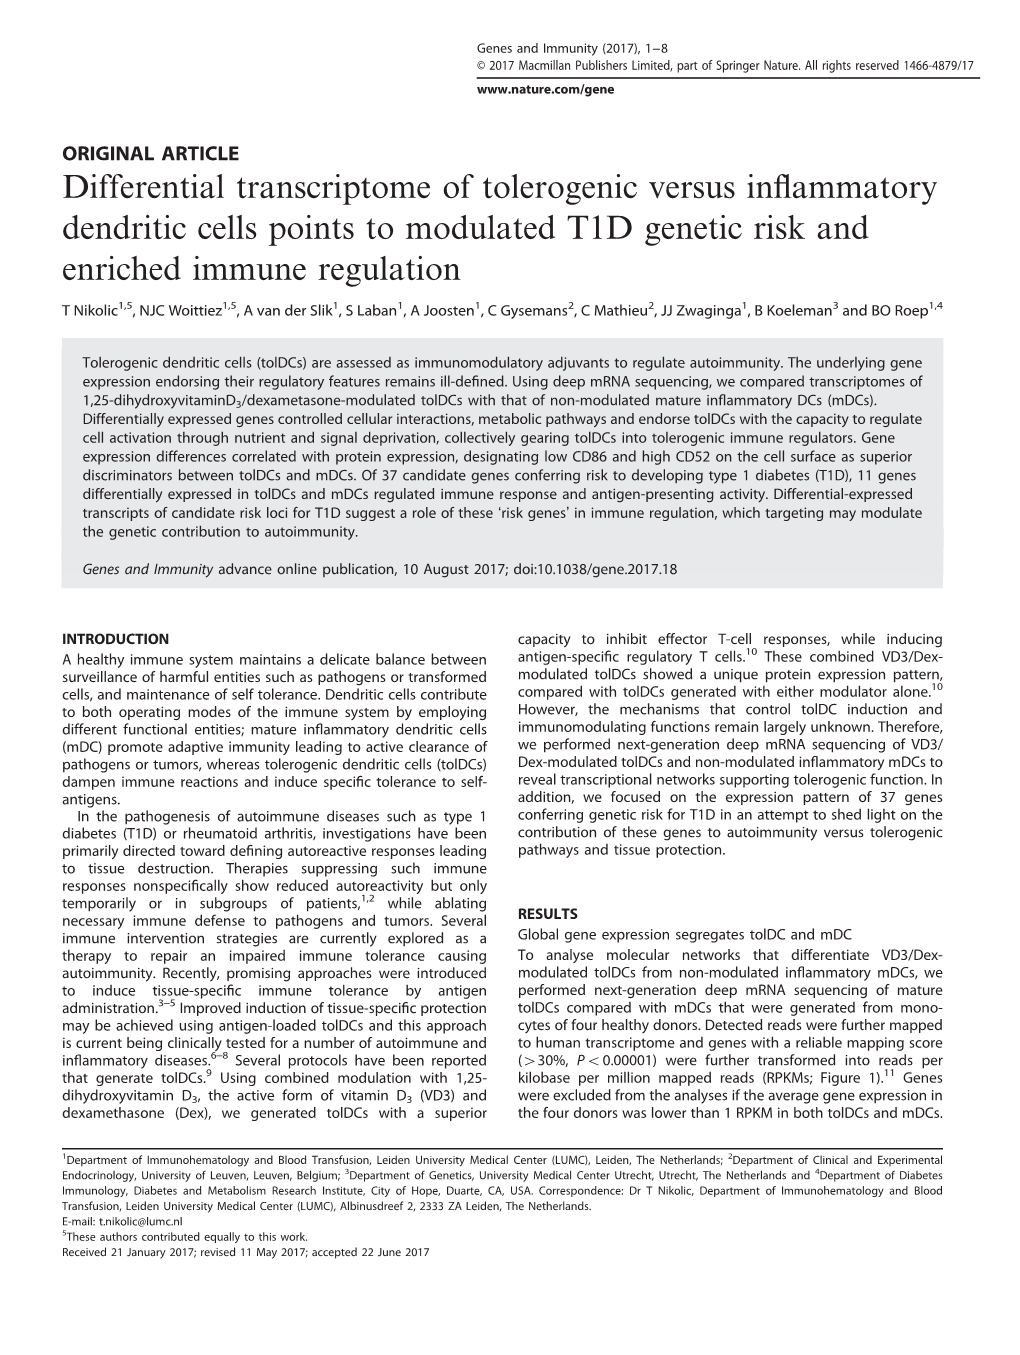 Differential Transcriptome of Tolerogenic Versus Inflammatory